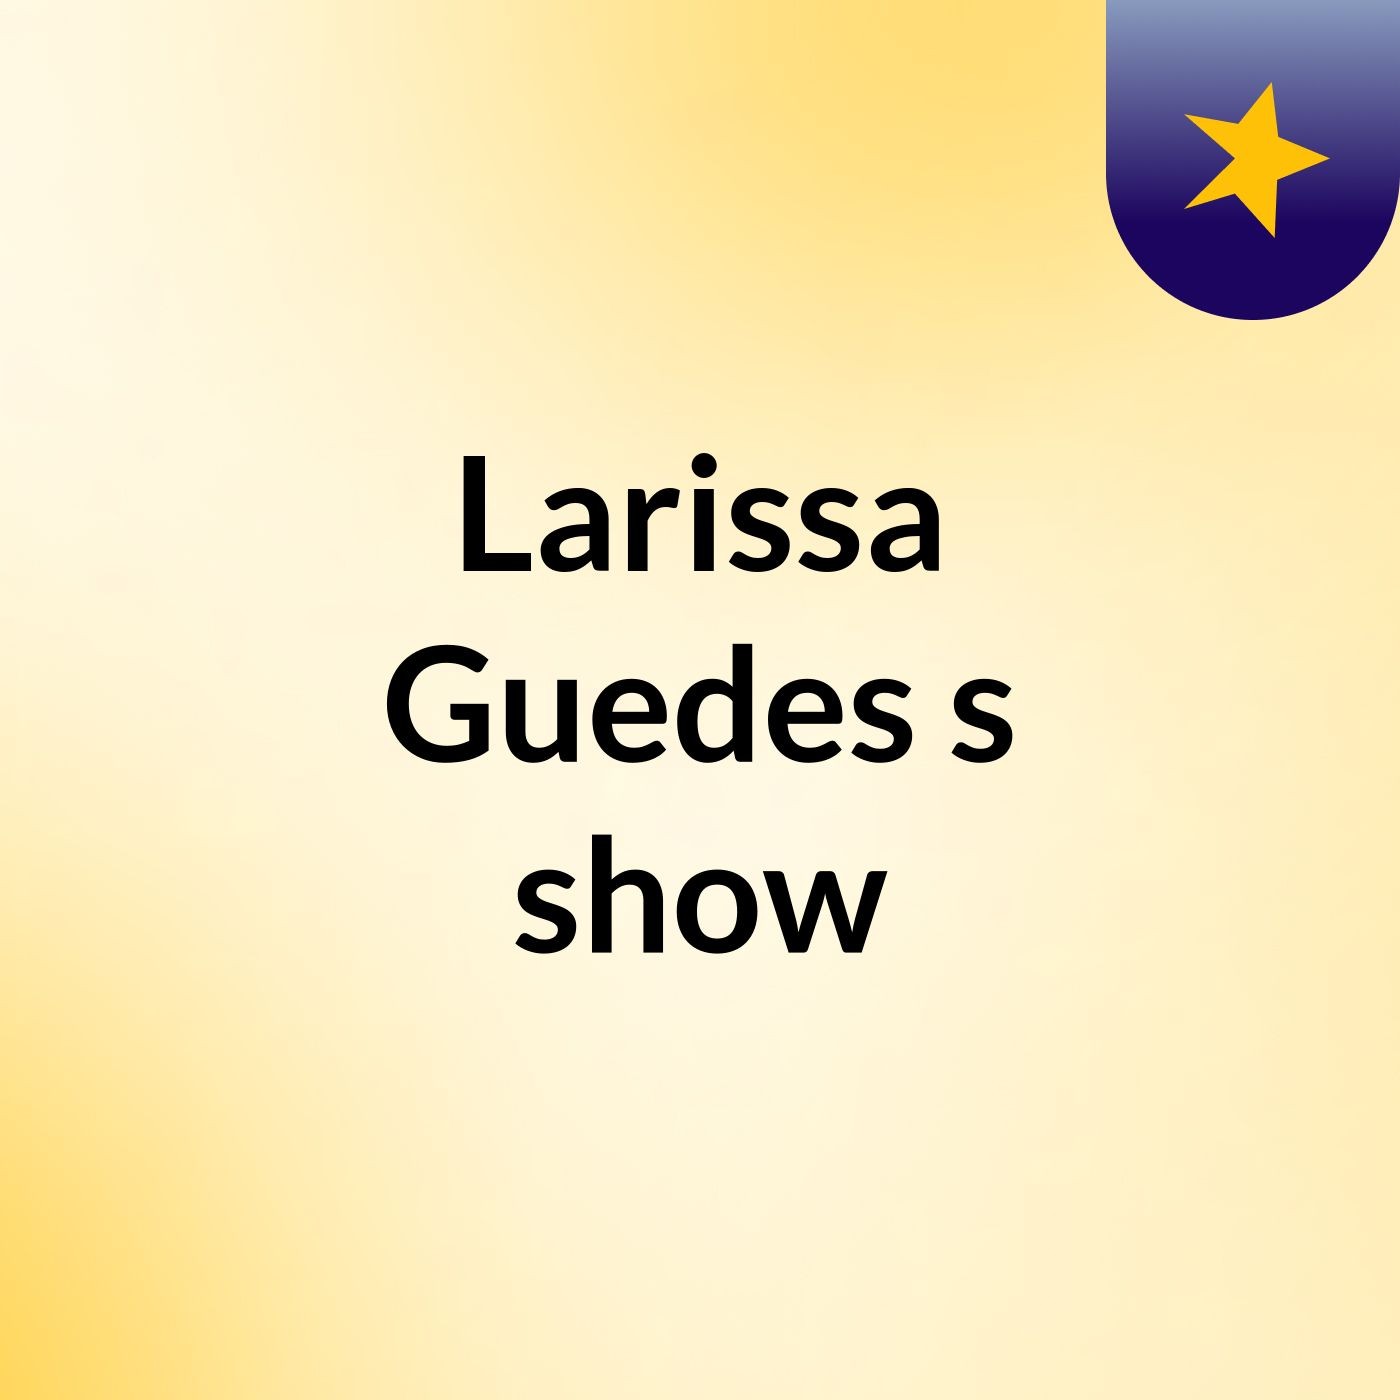 Larissa Guedes's show